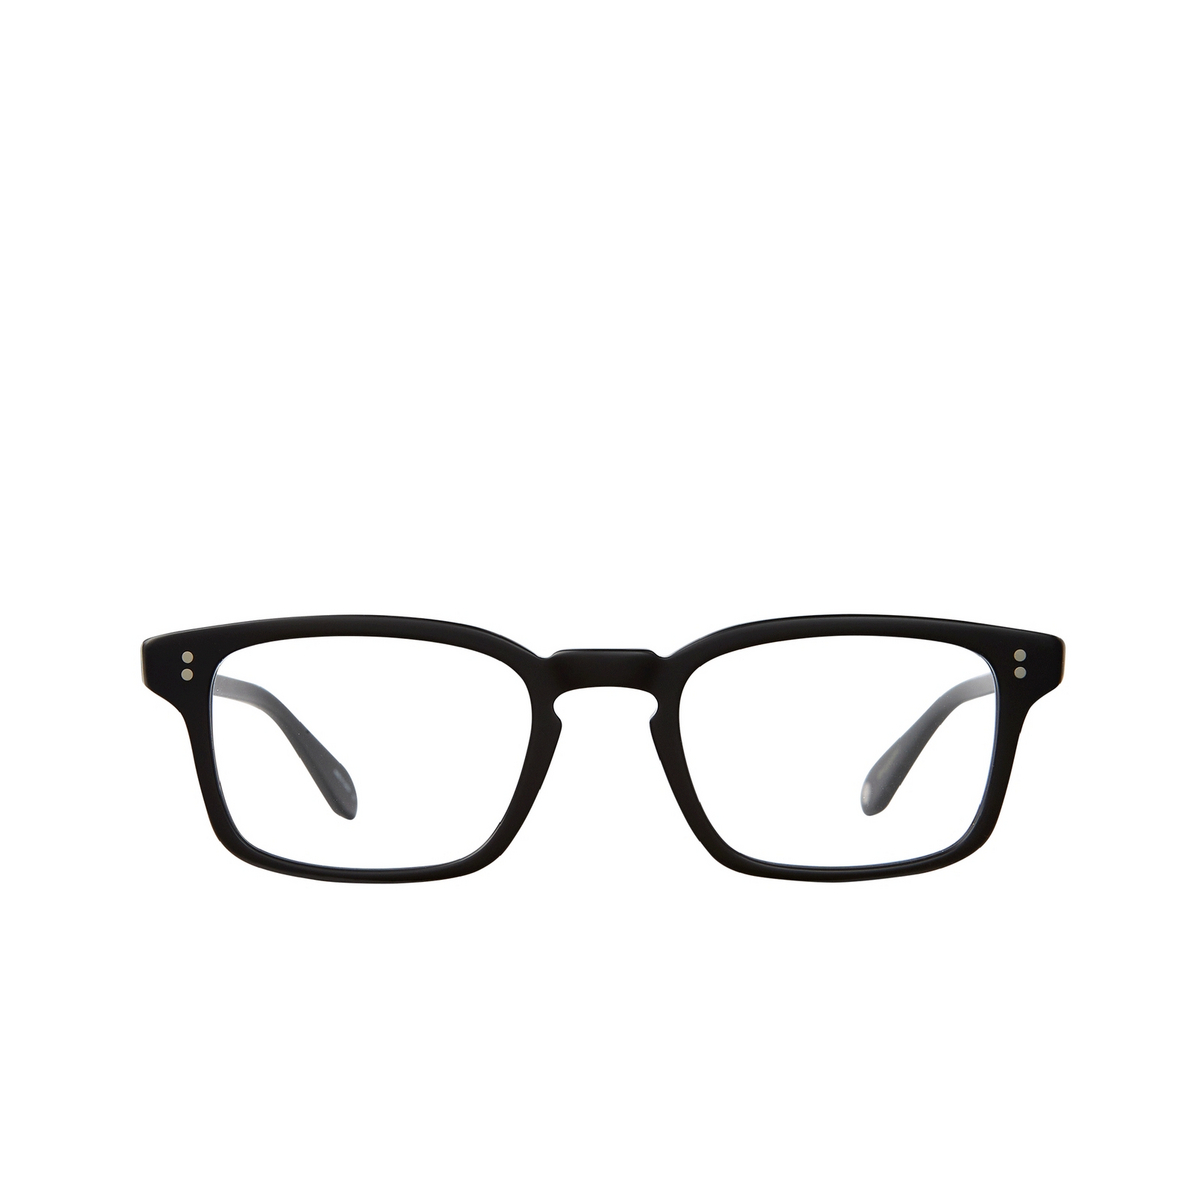 Garrett Leight DIMMICK Eyeglasses MBK Matte Black - front view